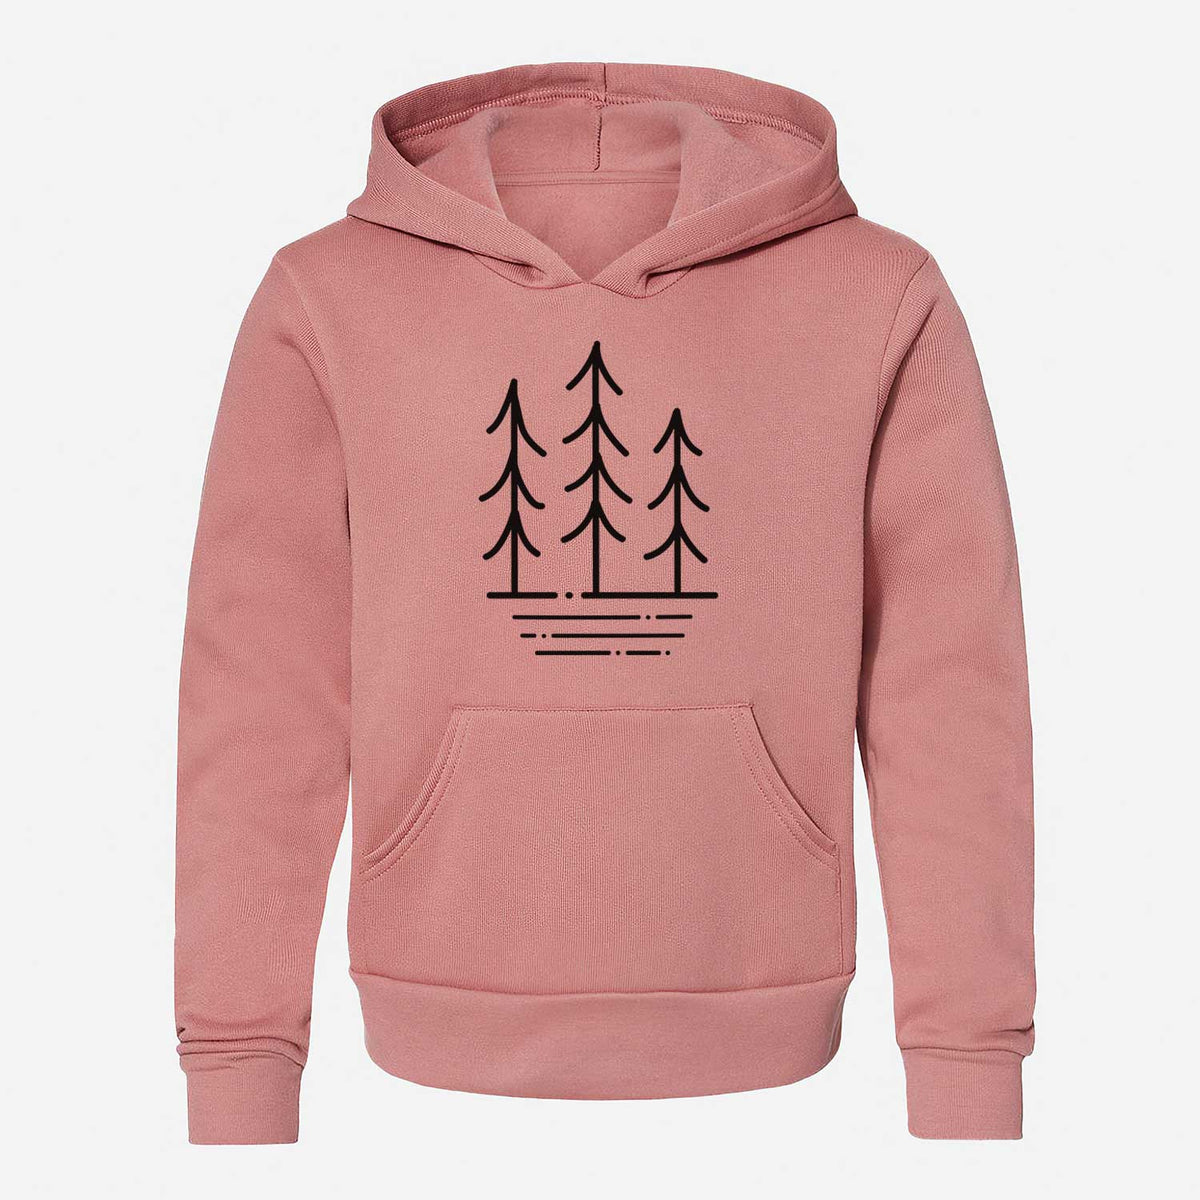 Three Trees - Youth Hoodie Sweatshirt